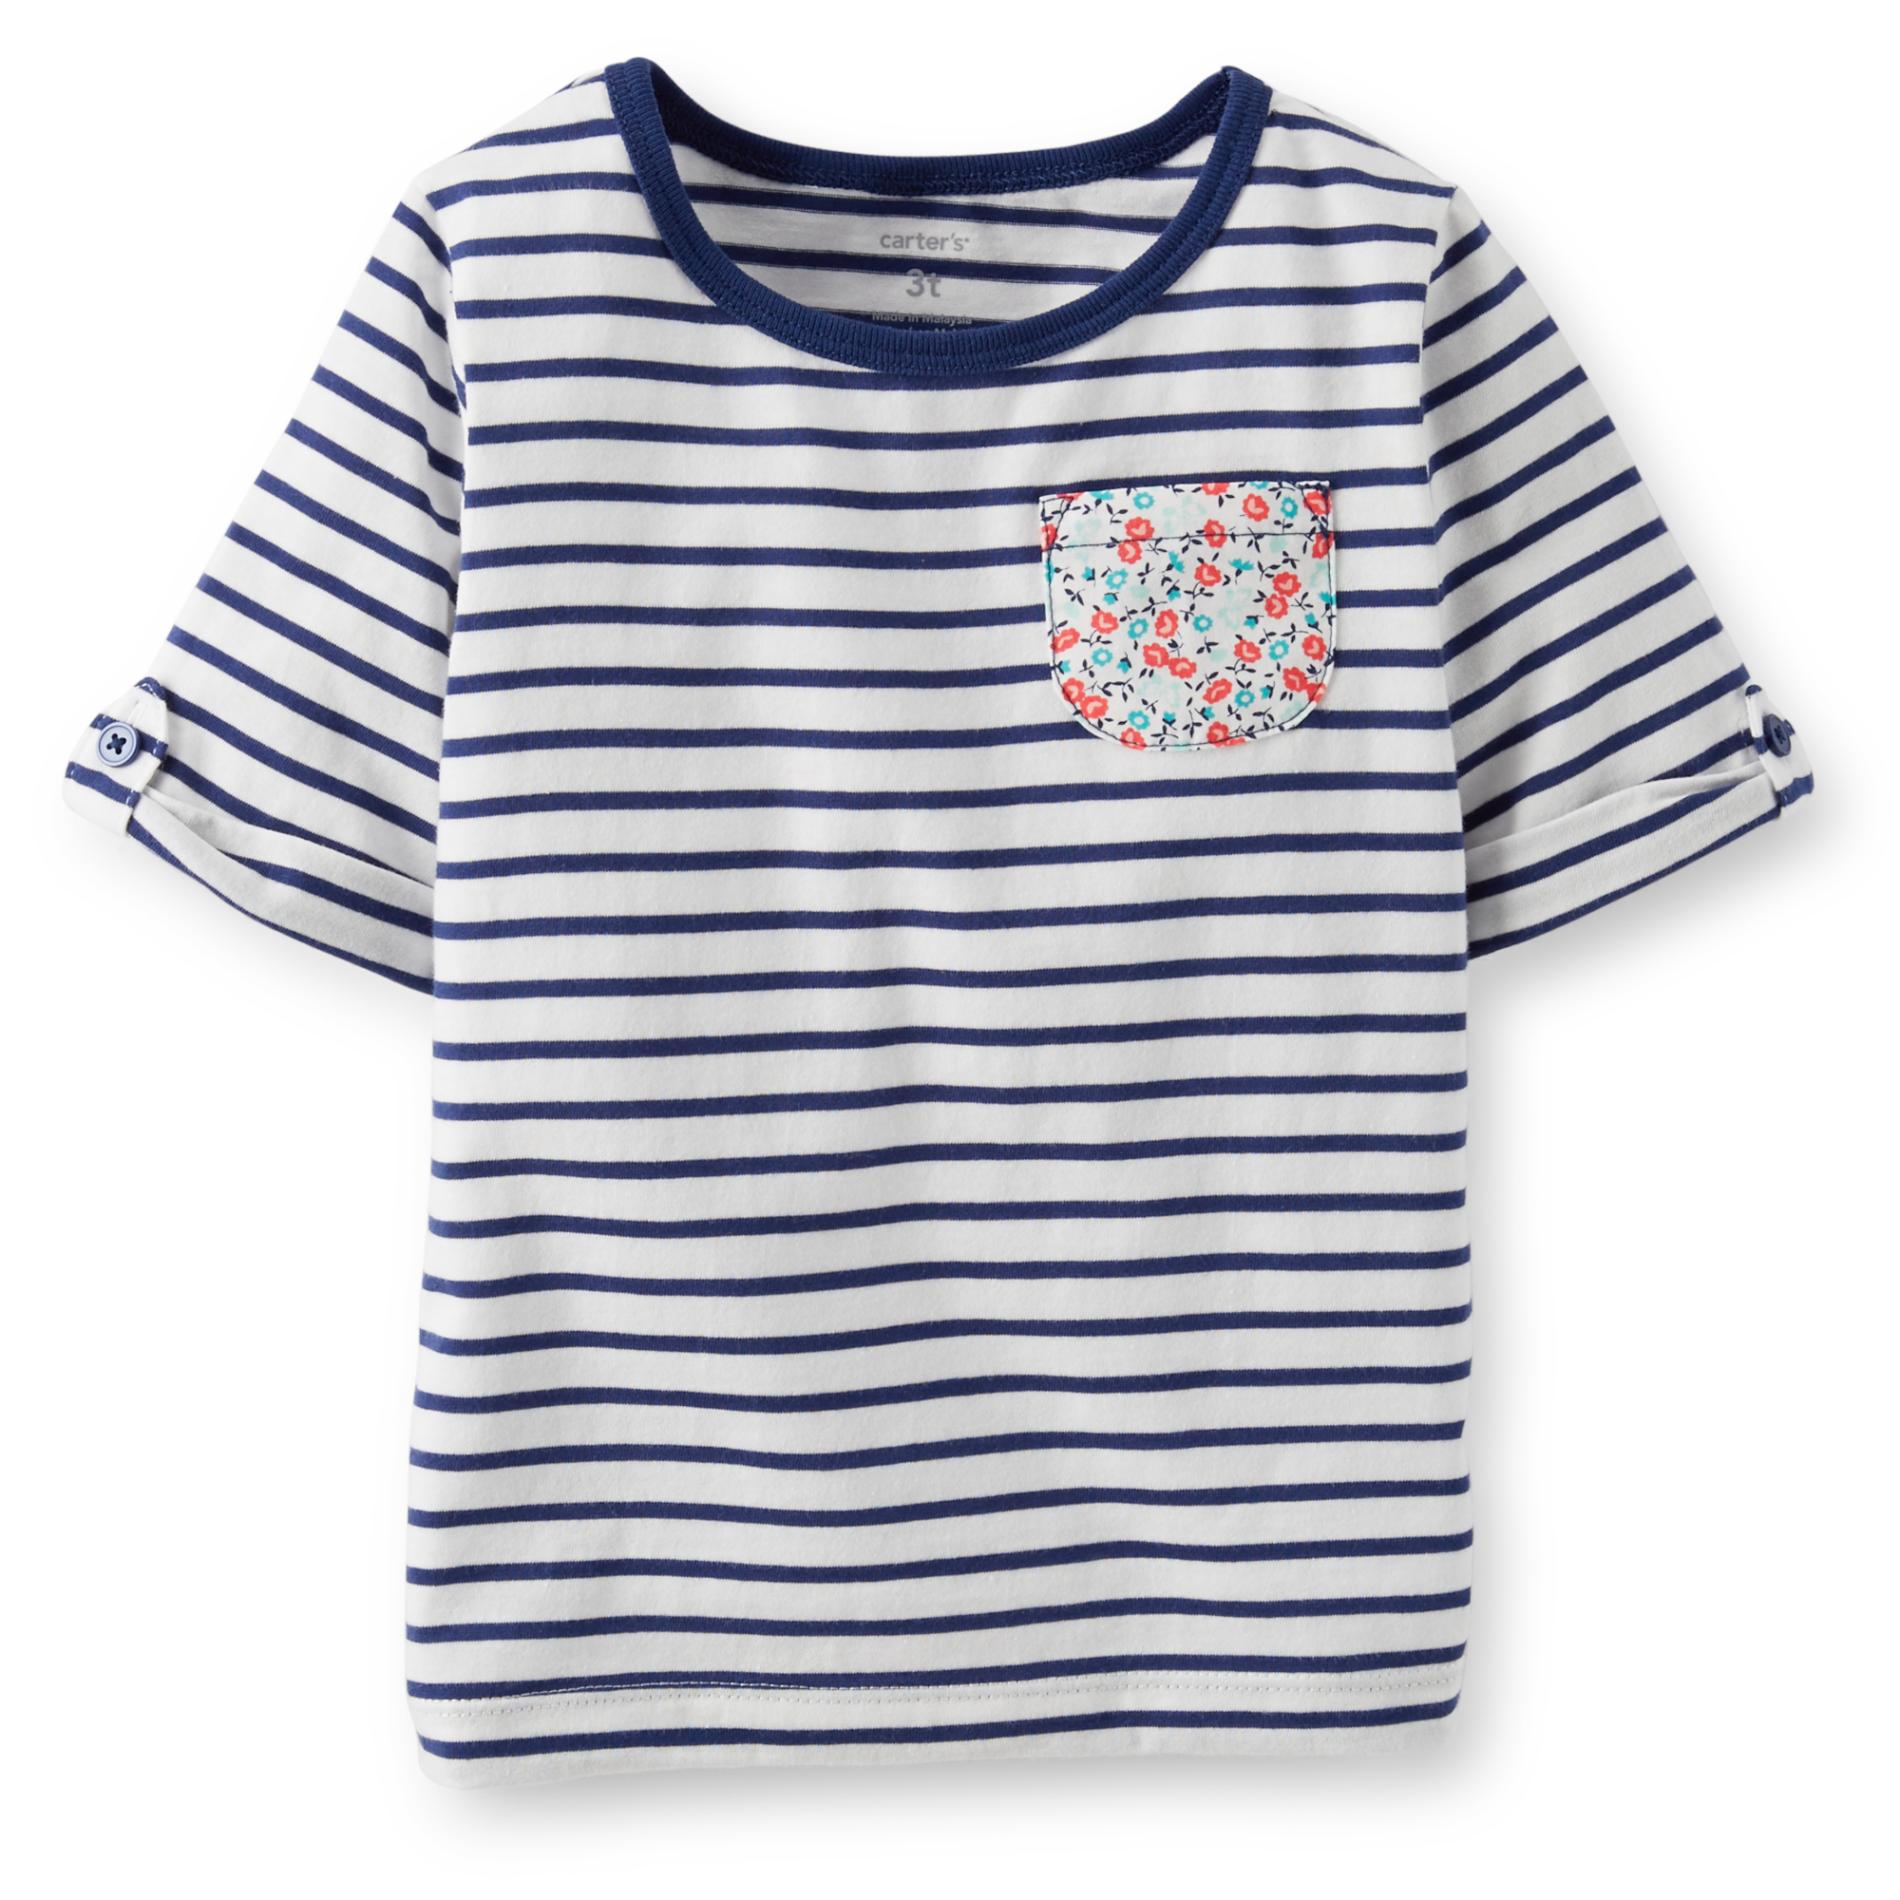 Carter's Toddler Girl's T-Shirt - Striped